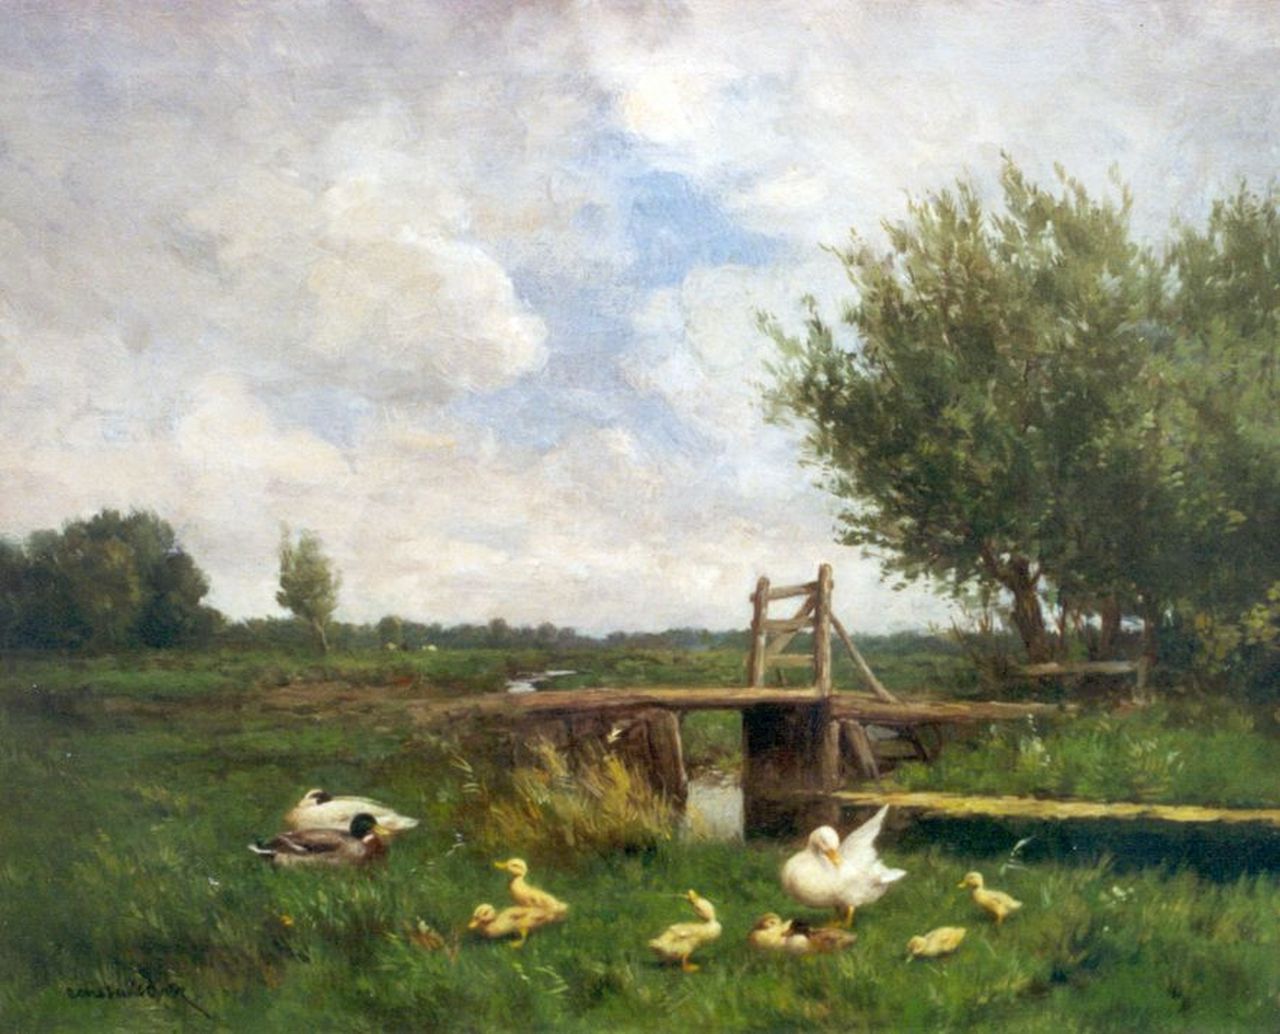 Artz C.D.L.  | 'Constant' David Ludovic Artz, Ducks in a polder landscape, oil on canvas 40.7 x 50.4 cm, signed l.l.